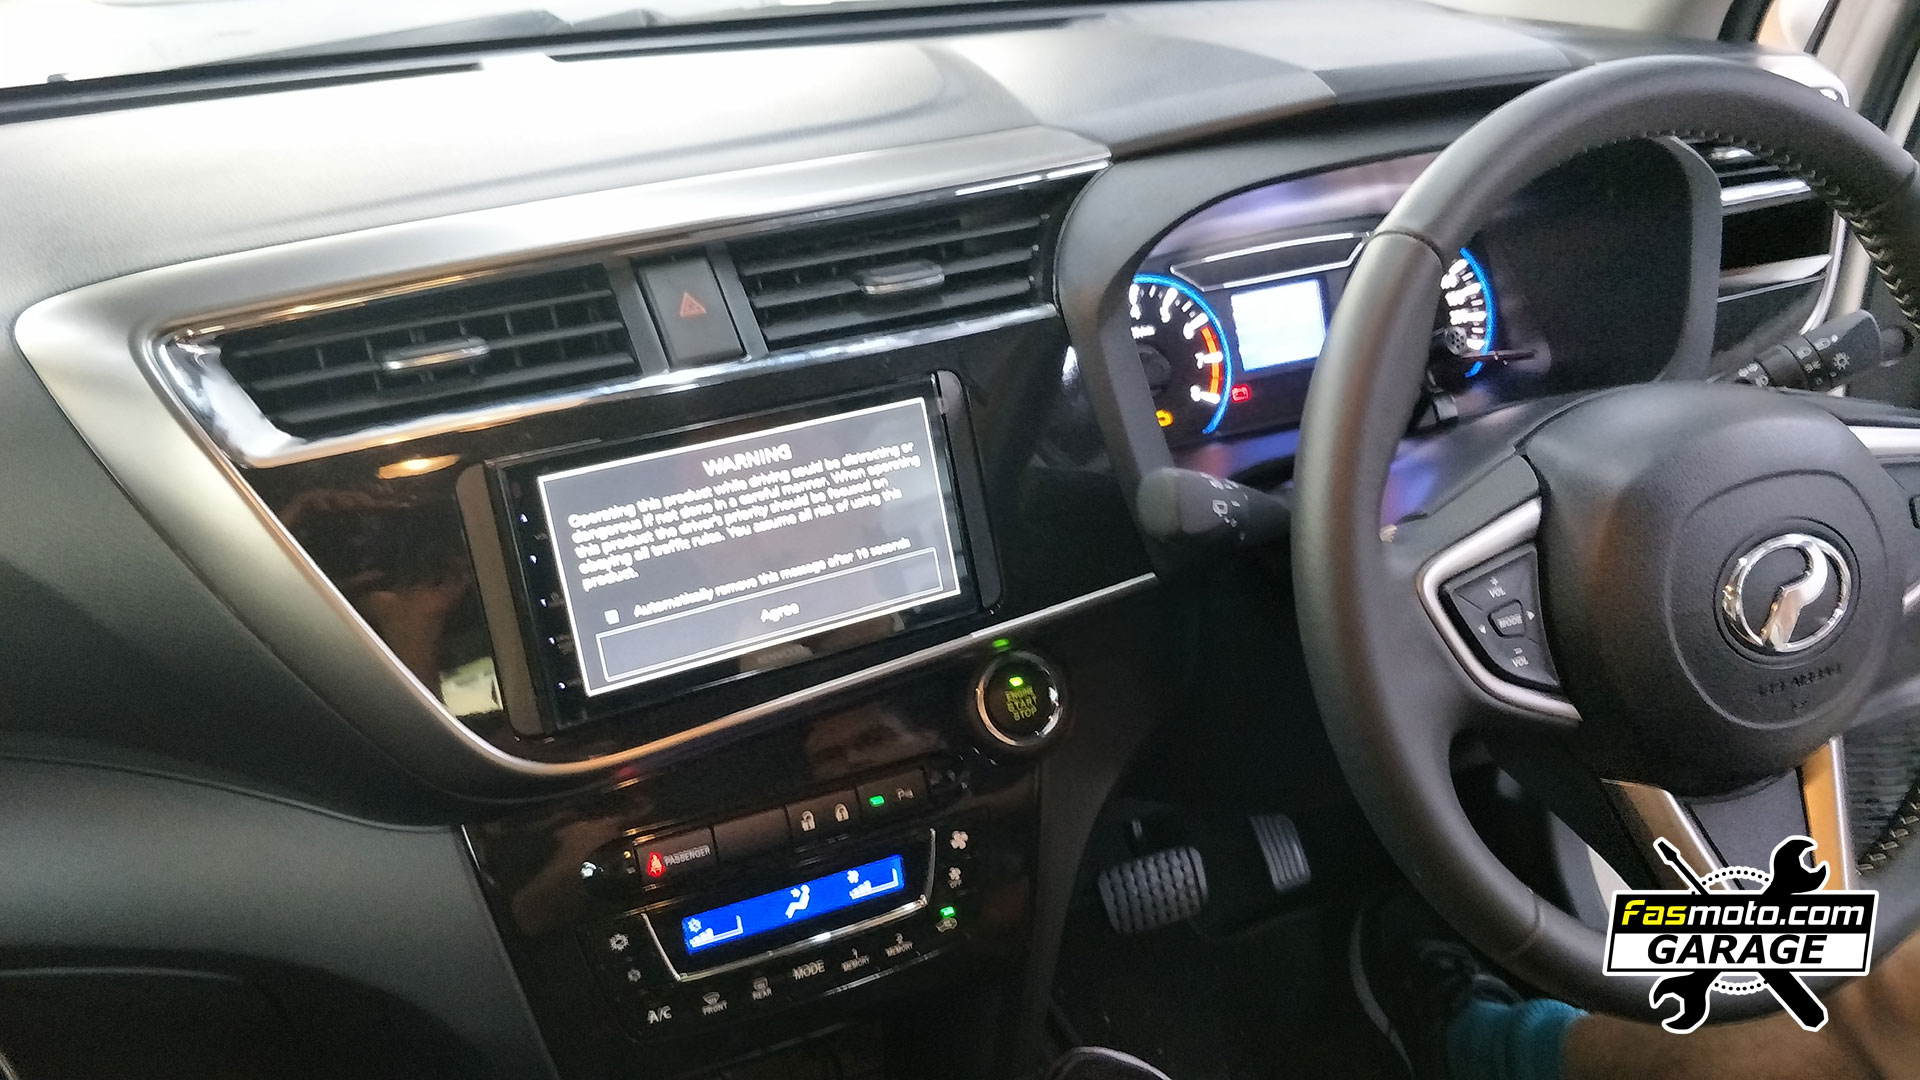 Exploring the UI on the Kenwood DMX5020S on Dareil's Perodua Myvi Advan G3